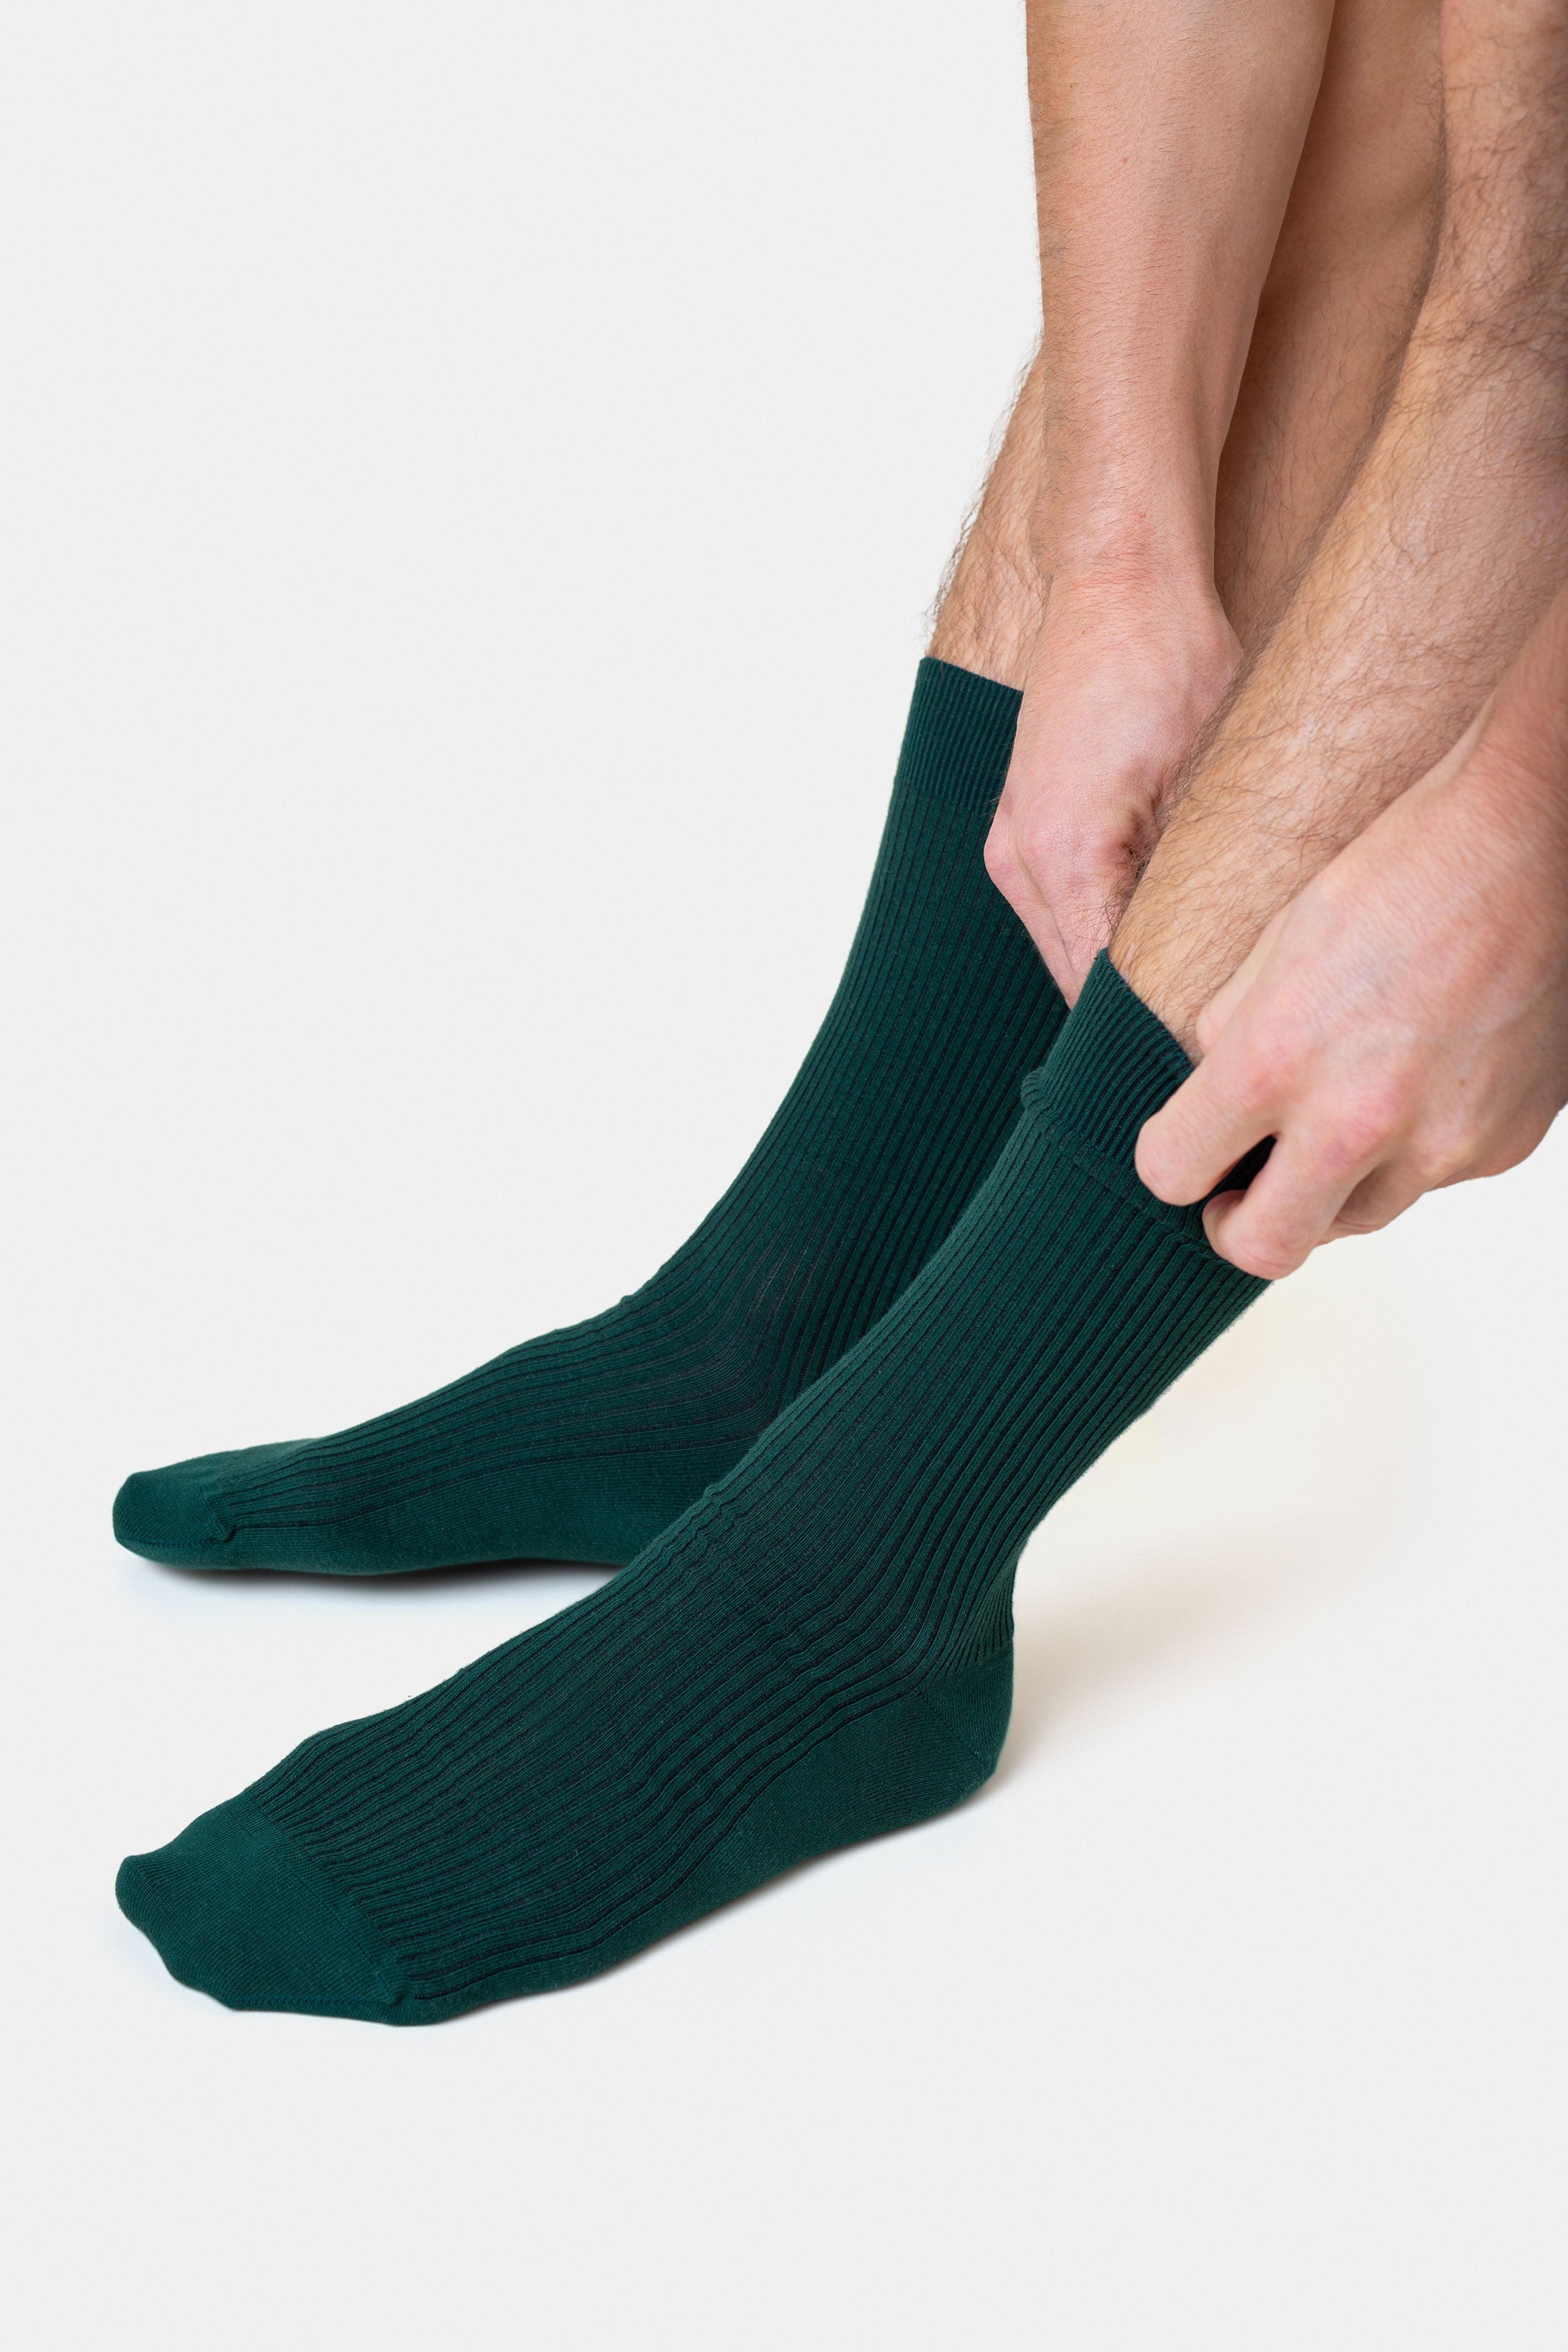 Merino Wool Blend Sock - Deep Black